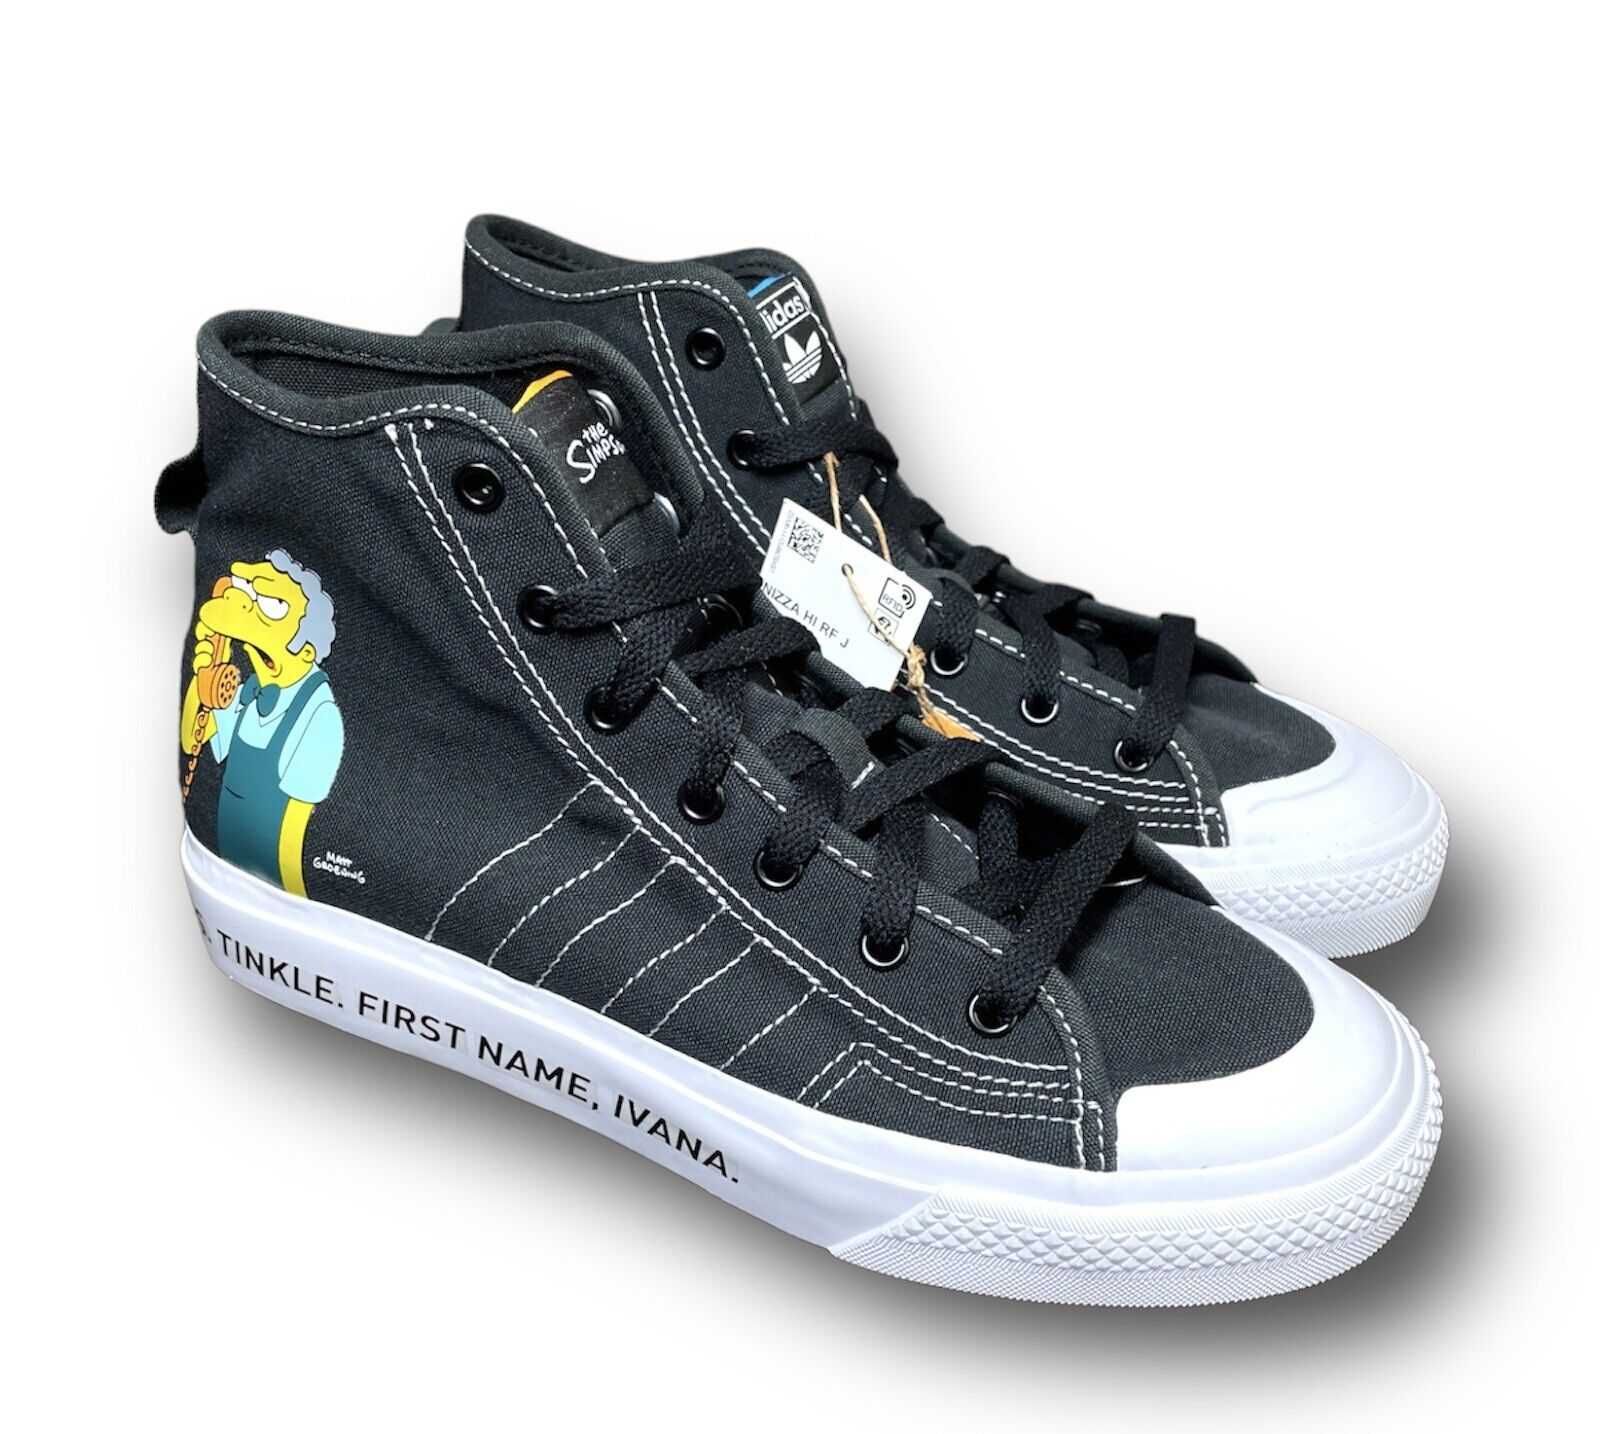 Adidas Originals/Simpsons Buty Dziecięce Nike  40